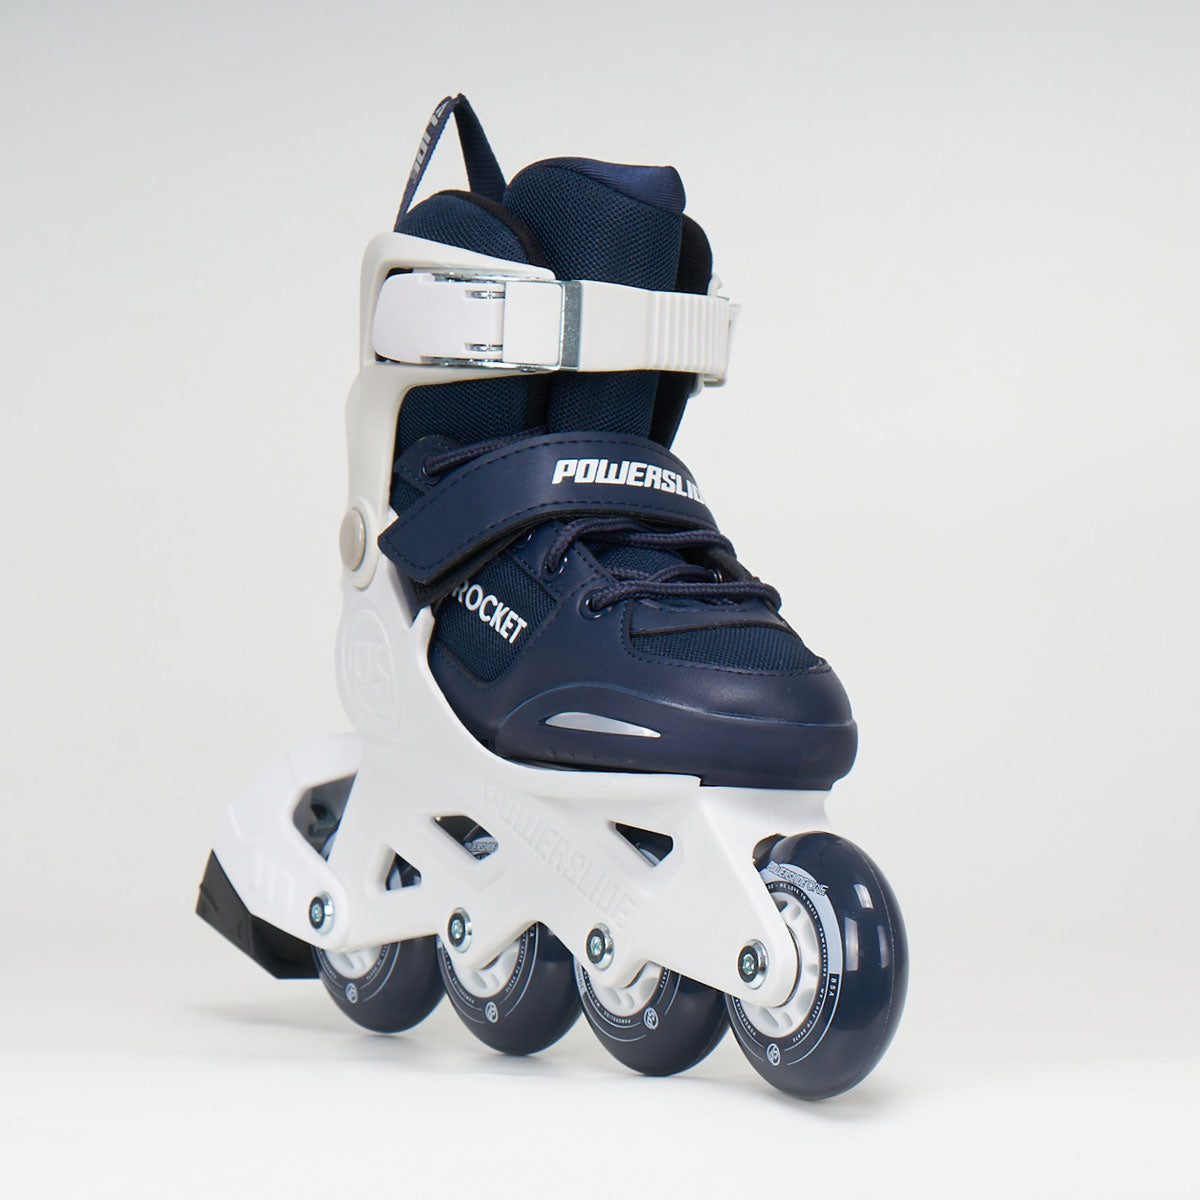 Powerslide Rocket Junior Adjustable Skates - Blue